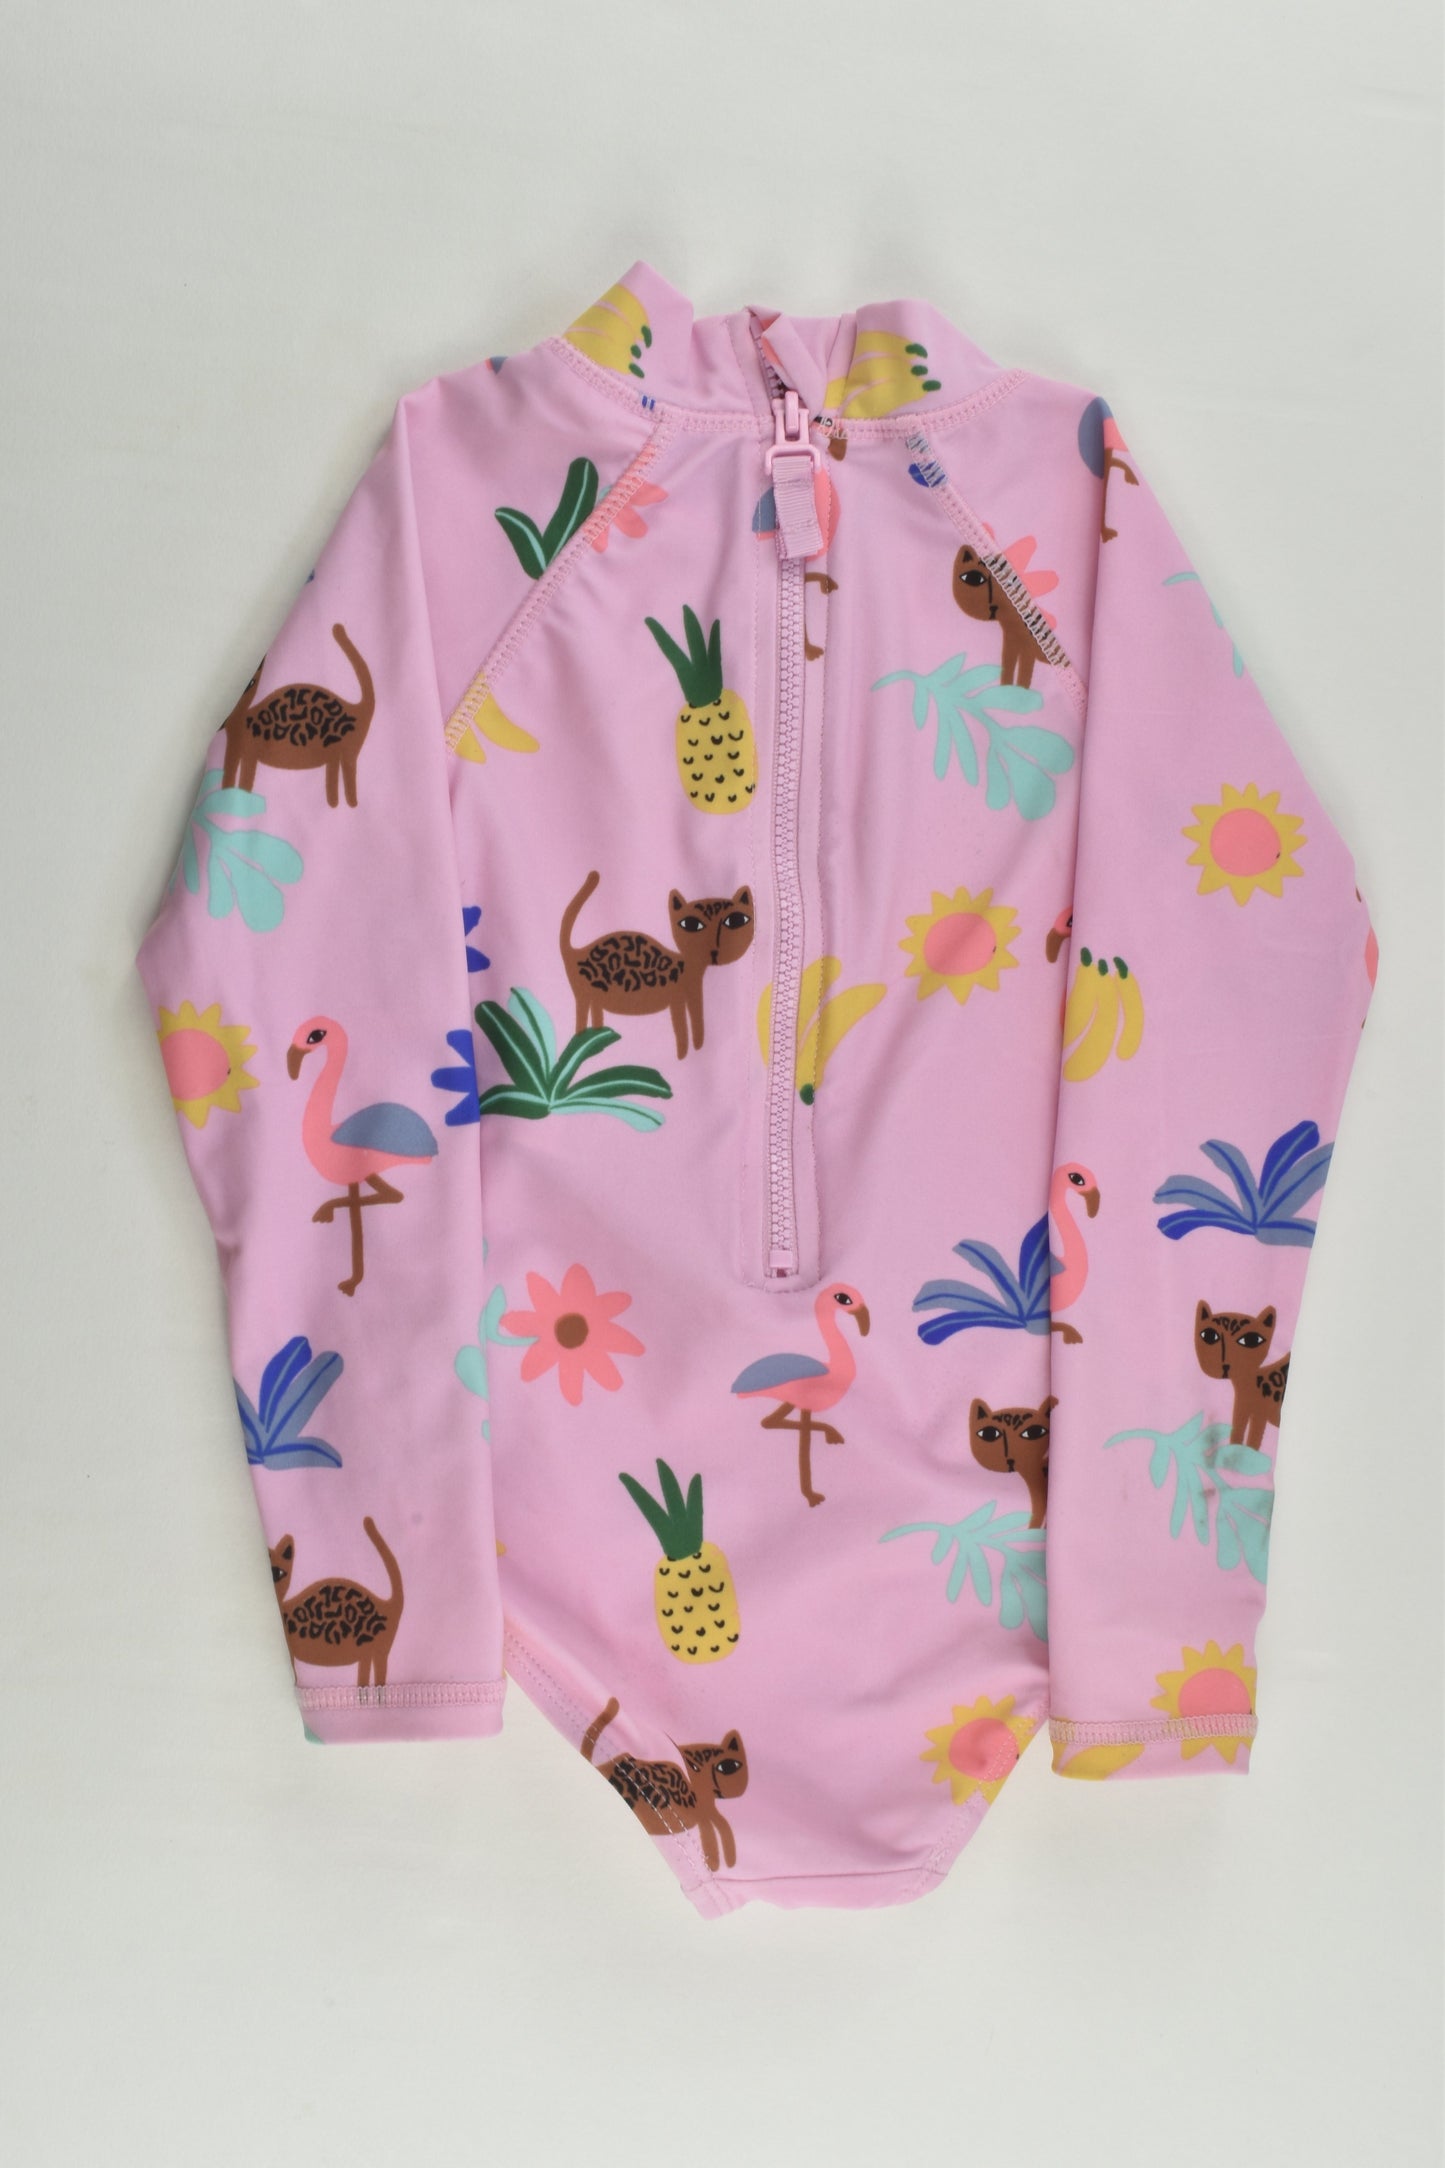 Cotton On Kids Size 2 Lined Lepard and Flamingo Rashie Swim Suit